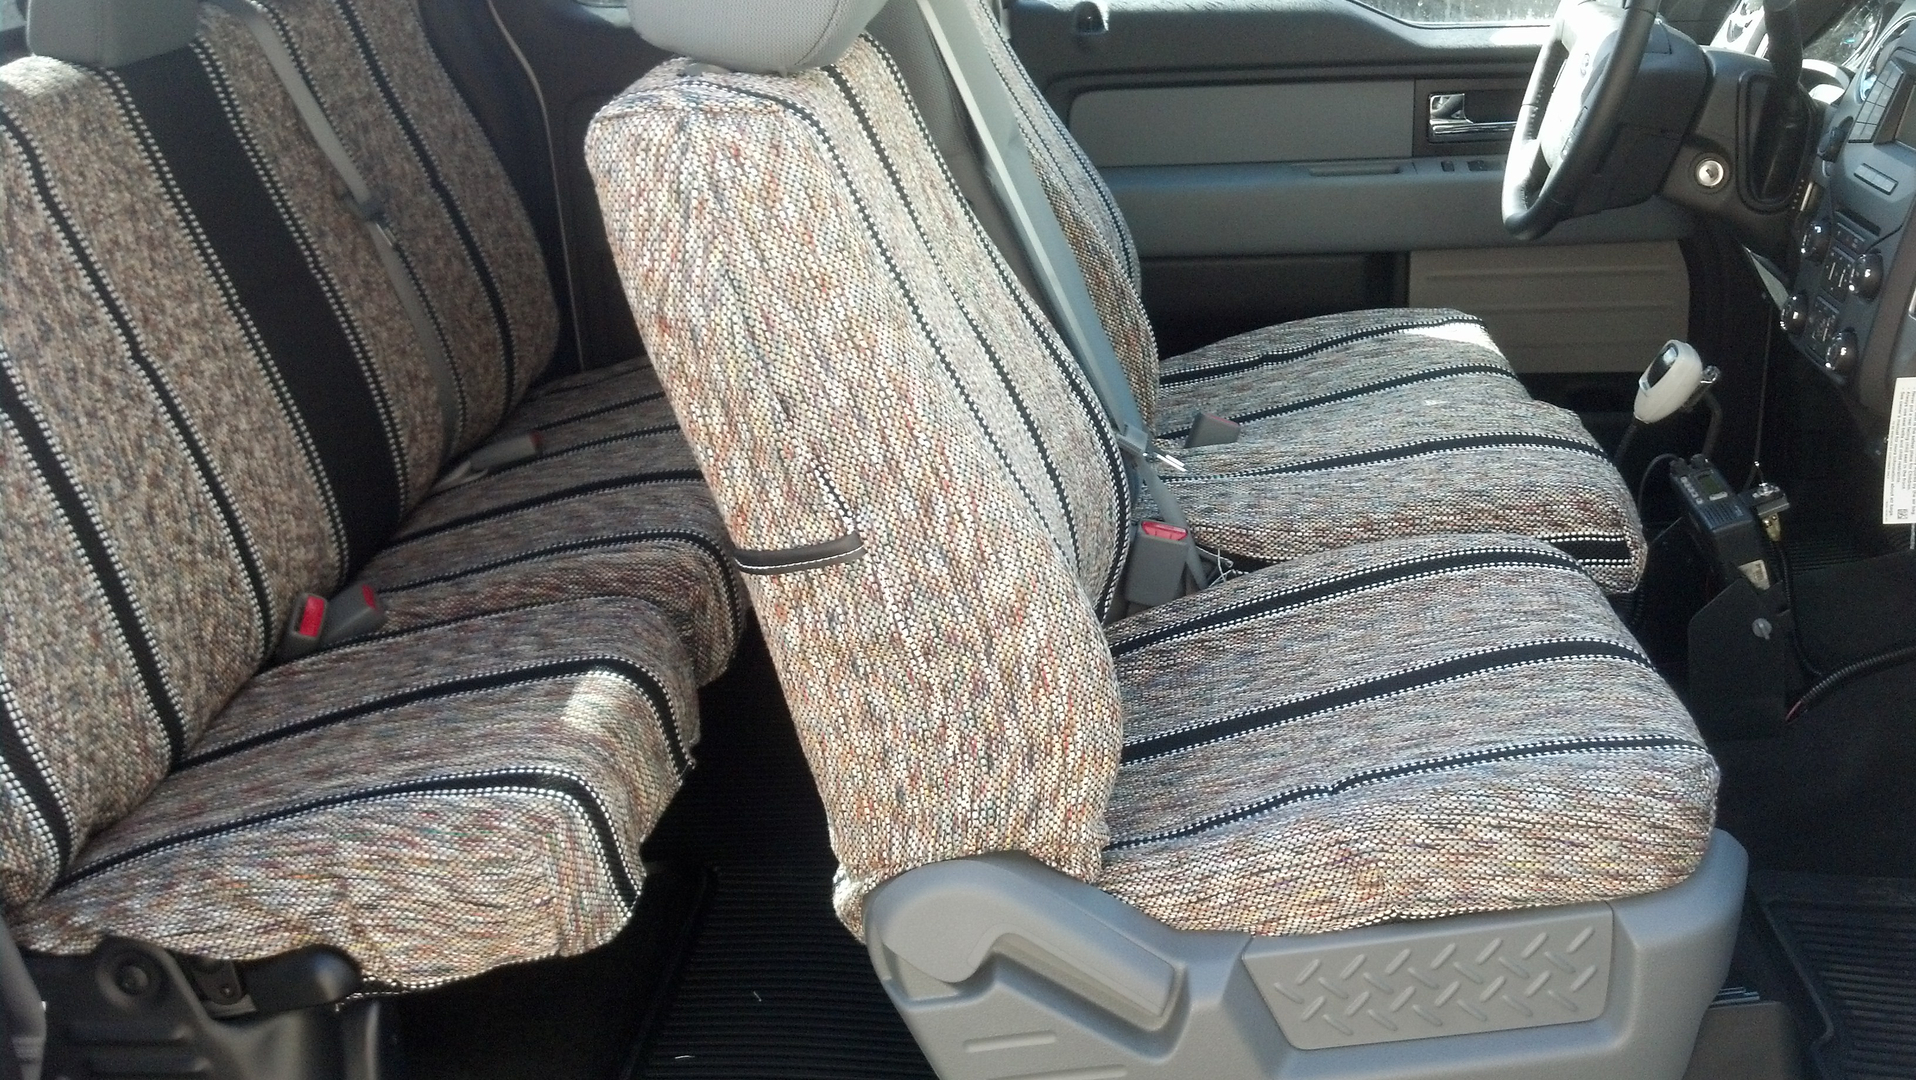 Auto seat covers